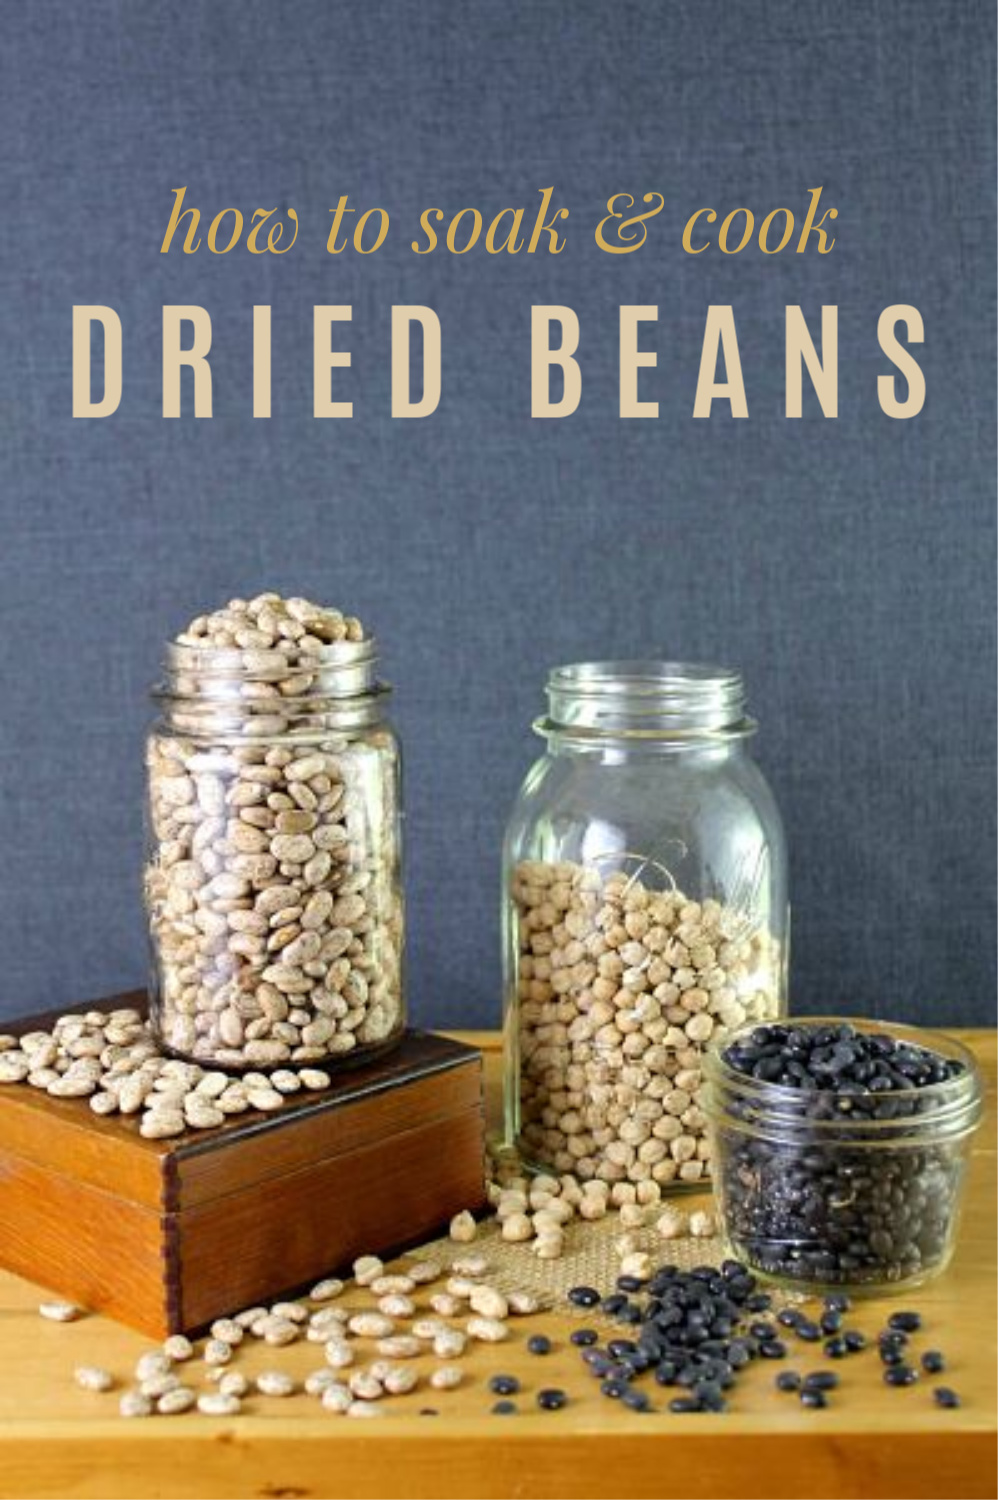 https://www.frugallivingnw.com/wp-content/uploads/2020/04/cooking-verses-canned-beans.jpg